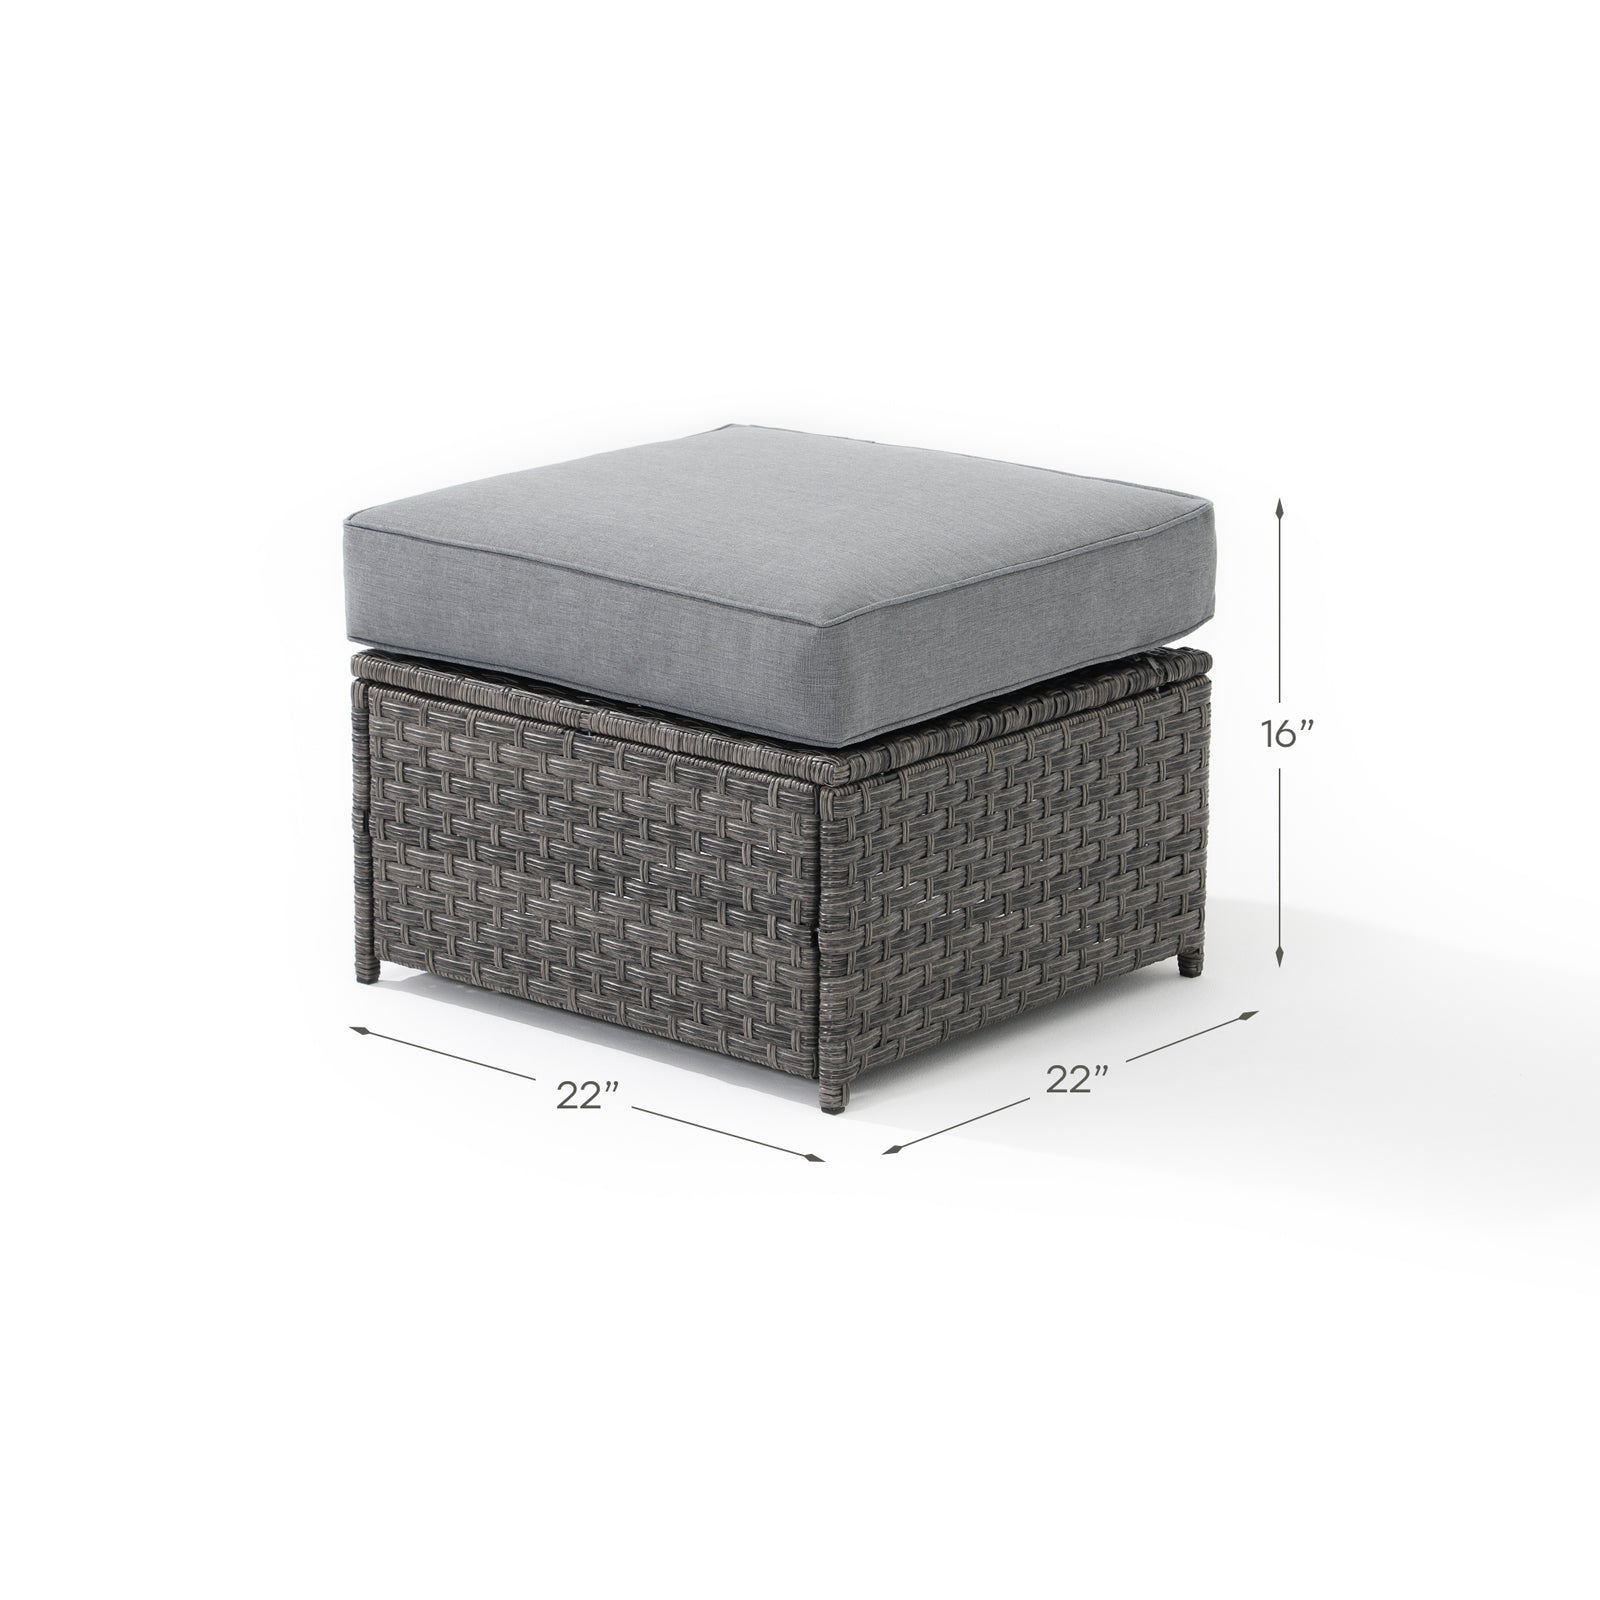 Ayia ottoman with grey rattan design, grey cushions, dimension information - Jardina Furniture#color_Grey